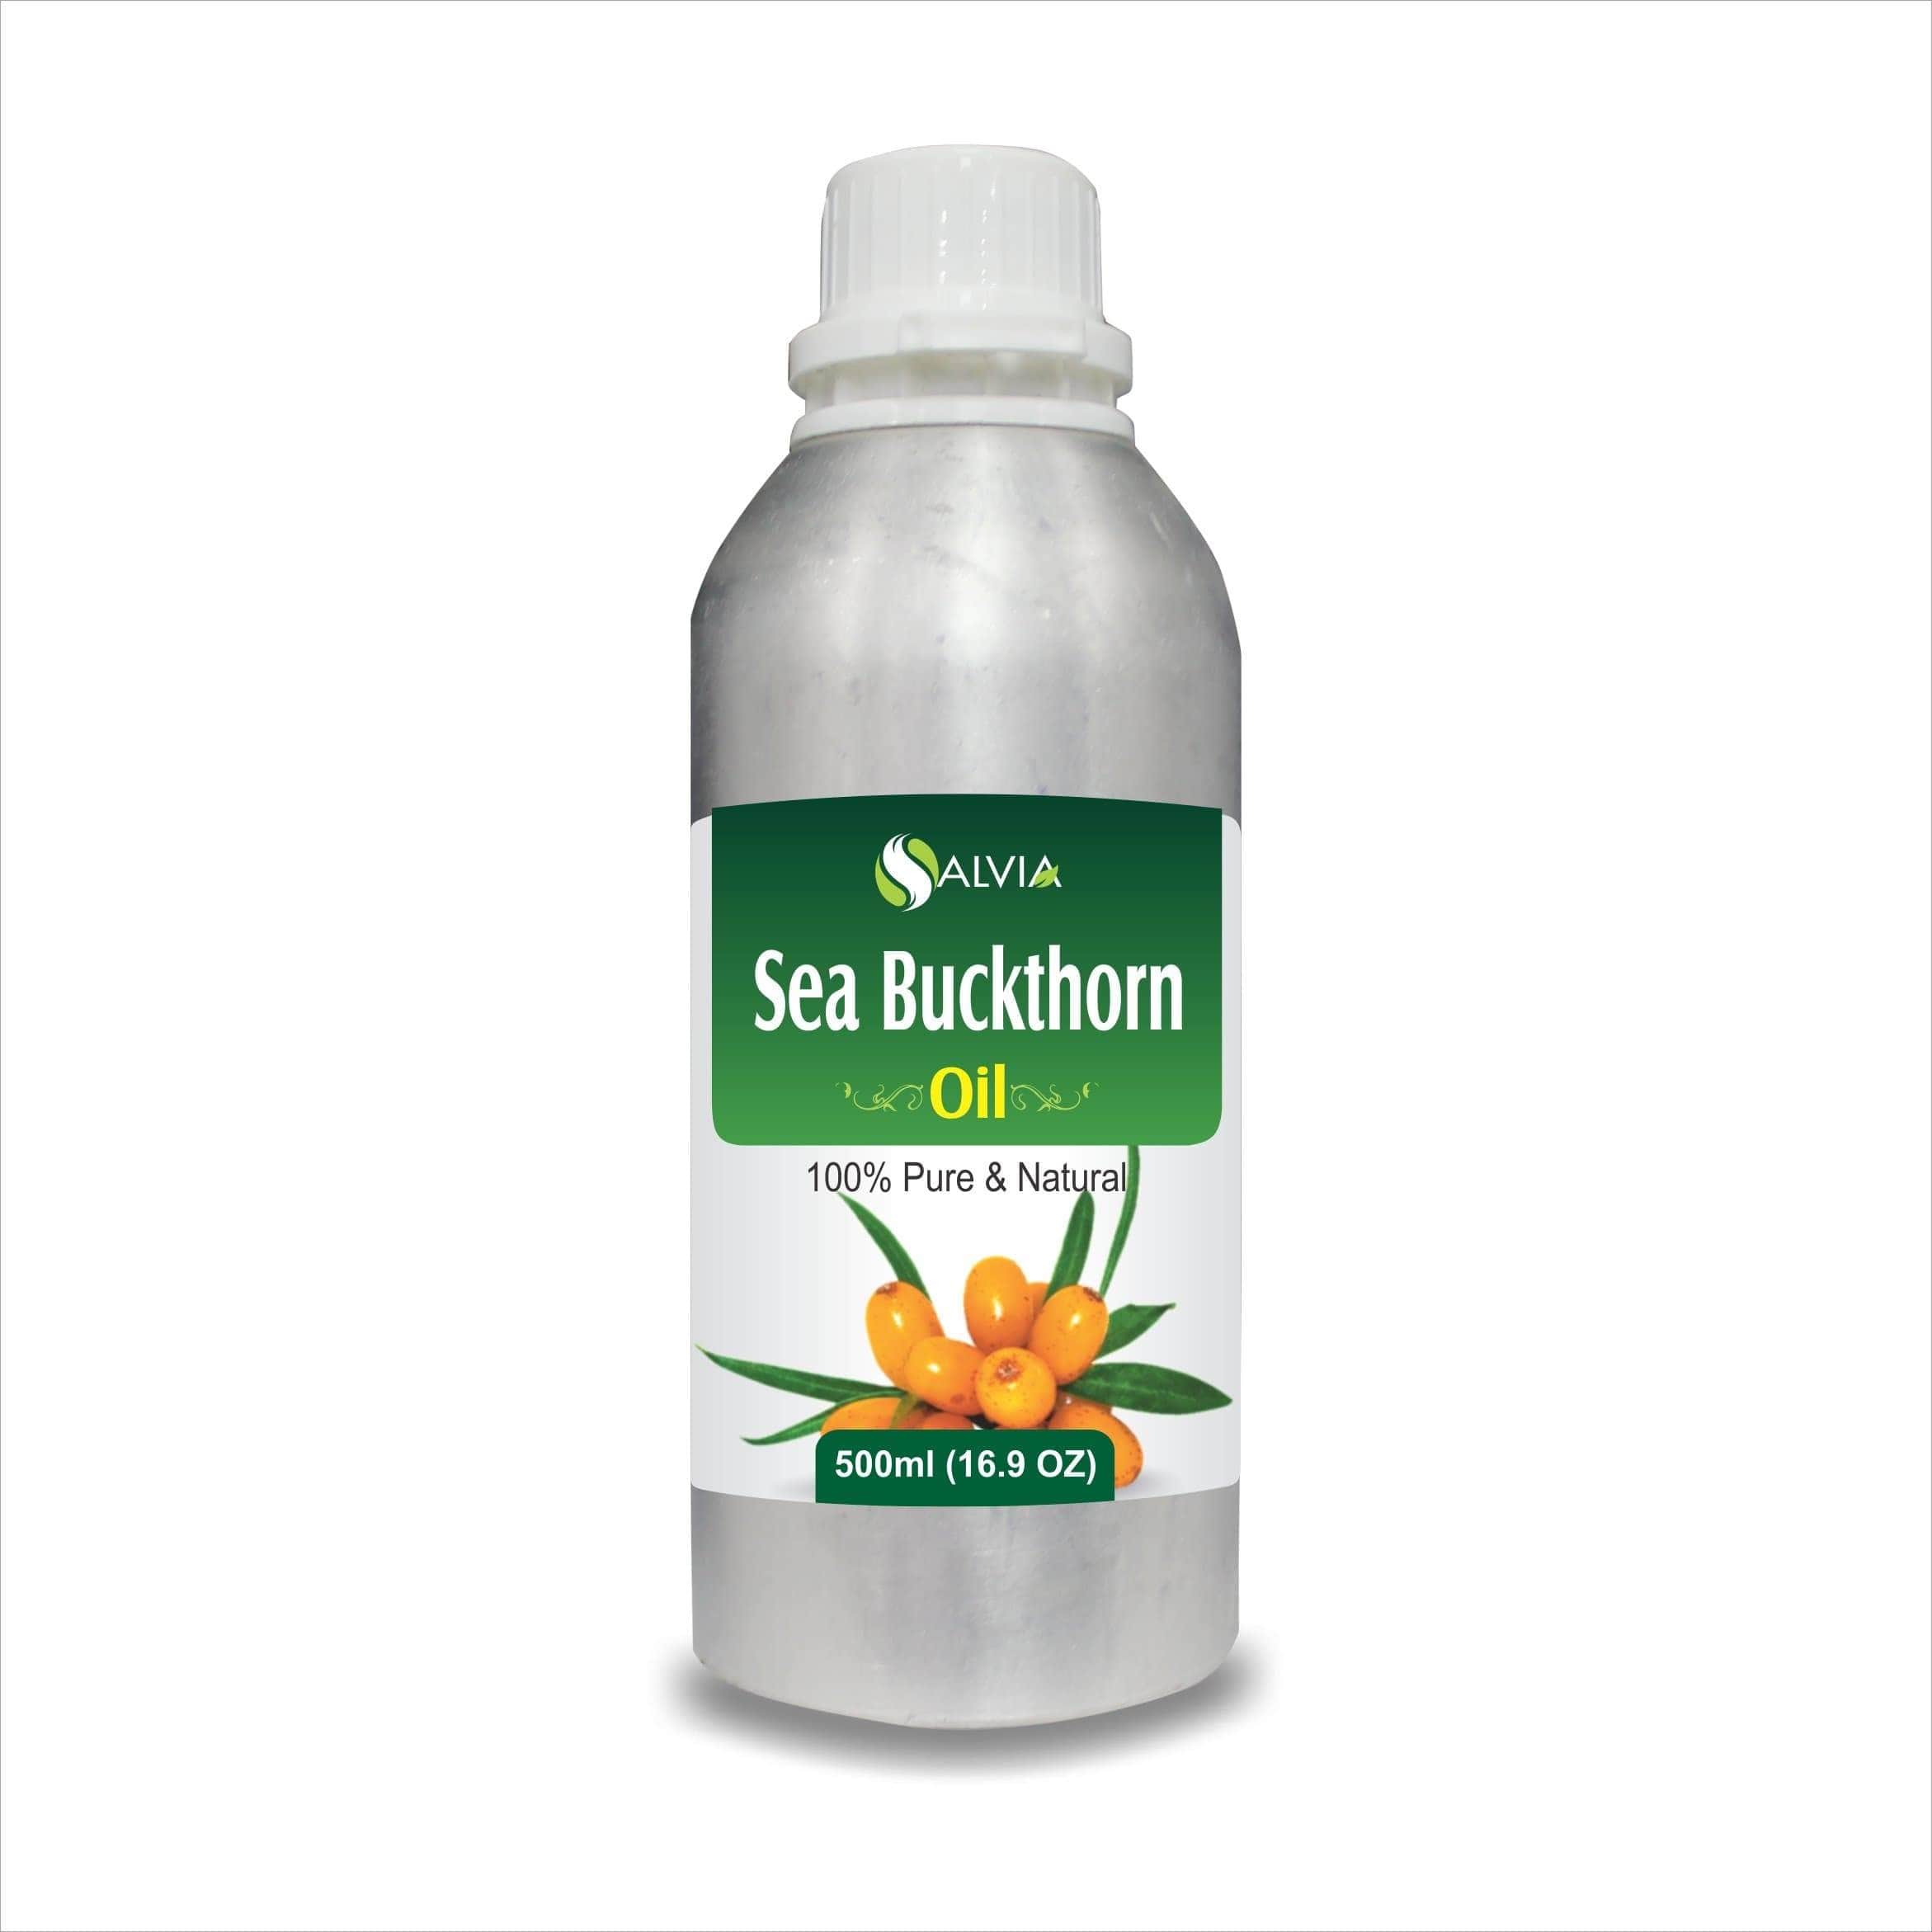 sea buckthorn oil dosage